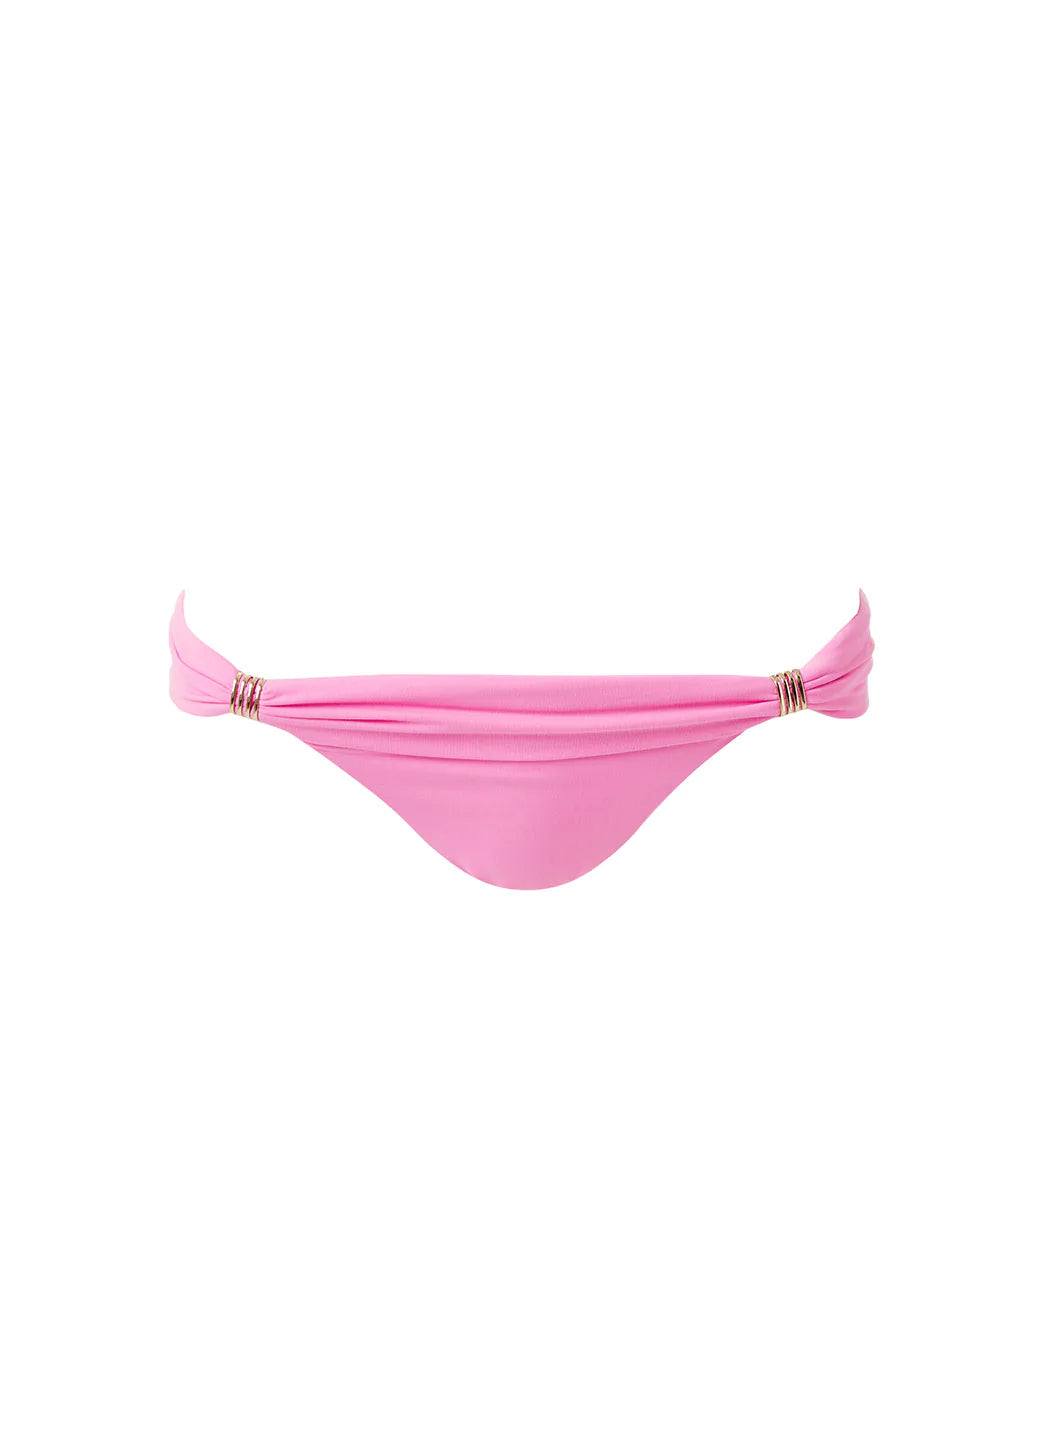 Grenada Pink Bikini Bottom